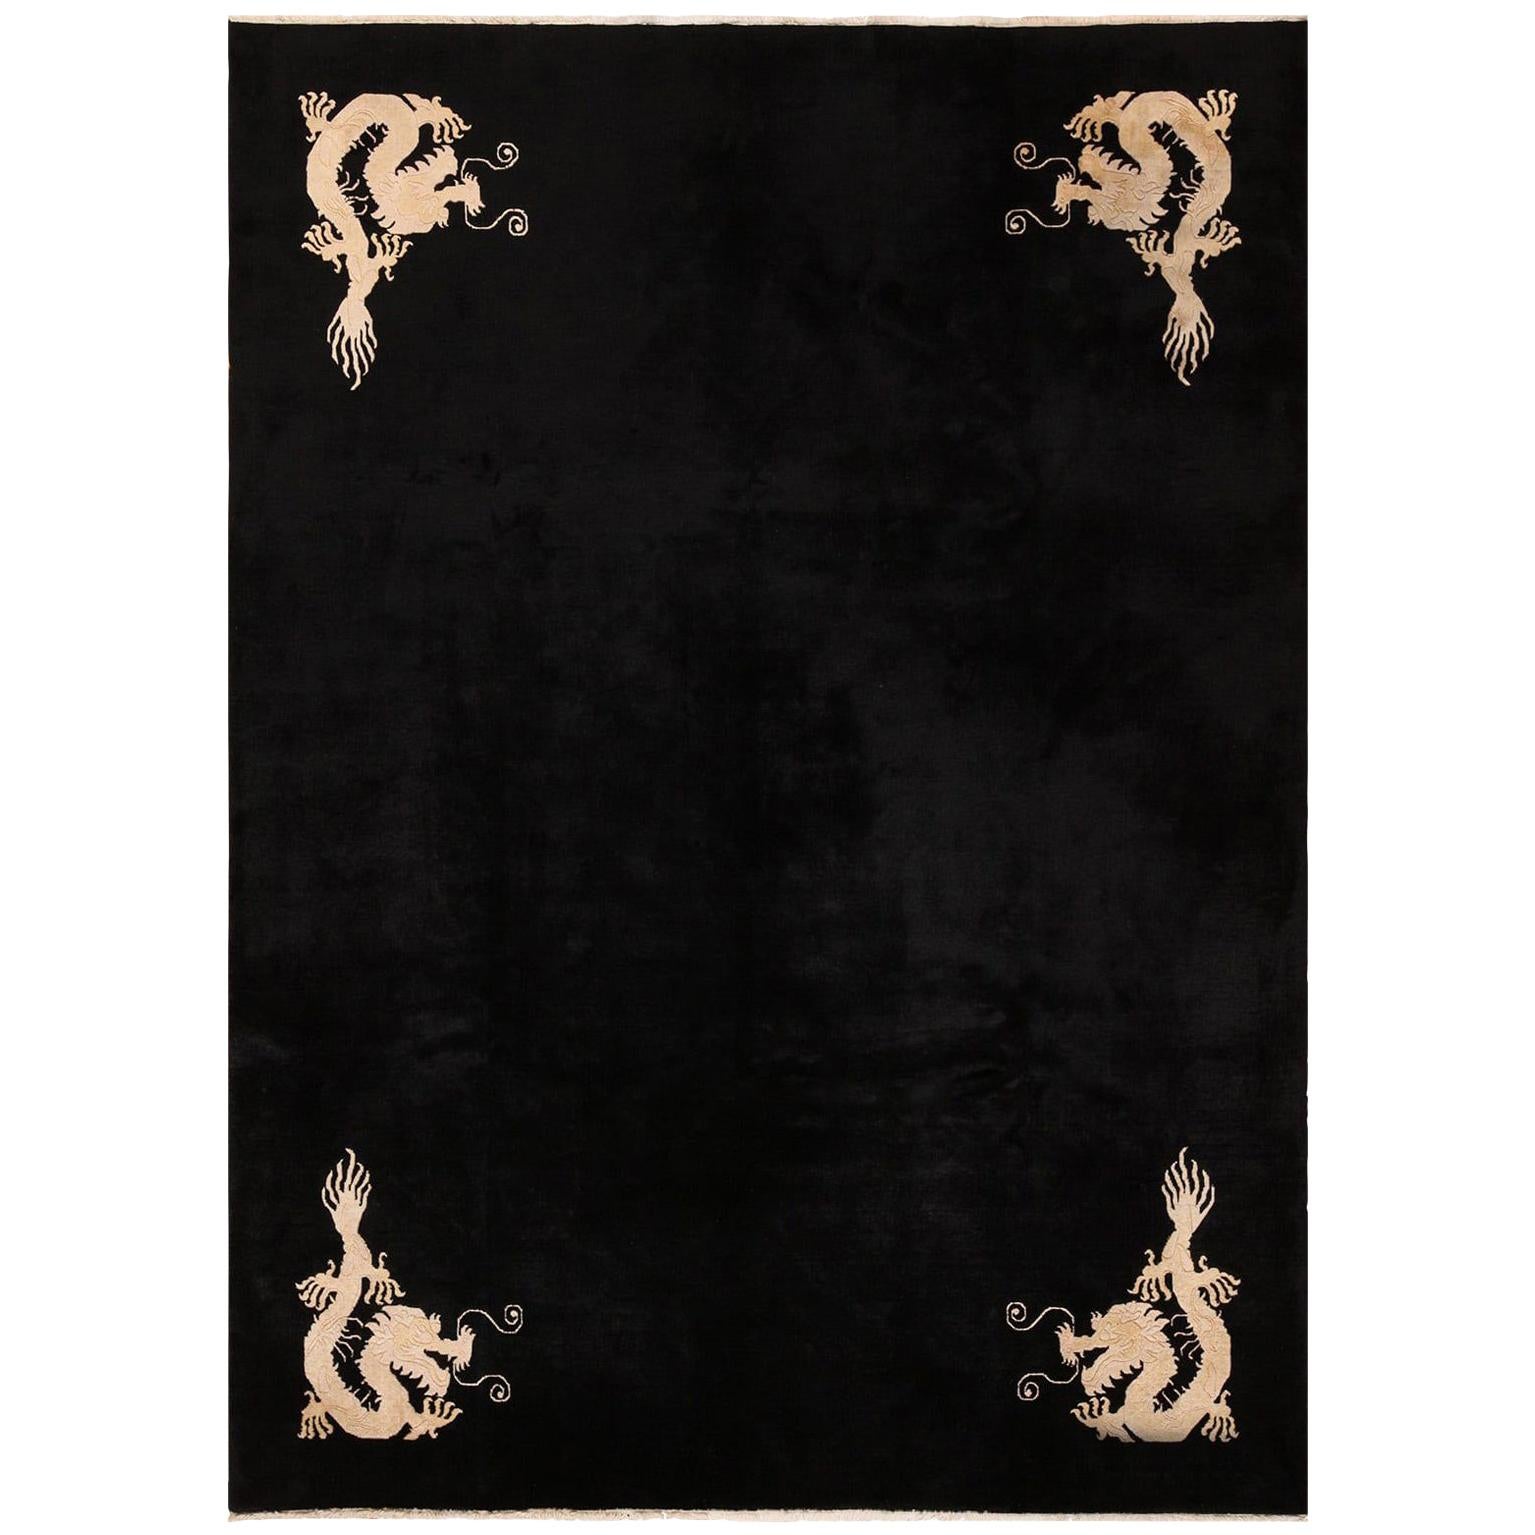 Benevolent Five Clawed Dragon Design Black Antique Chinese Rug. Size: 7' x 9' 6"